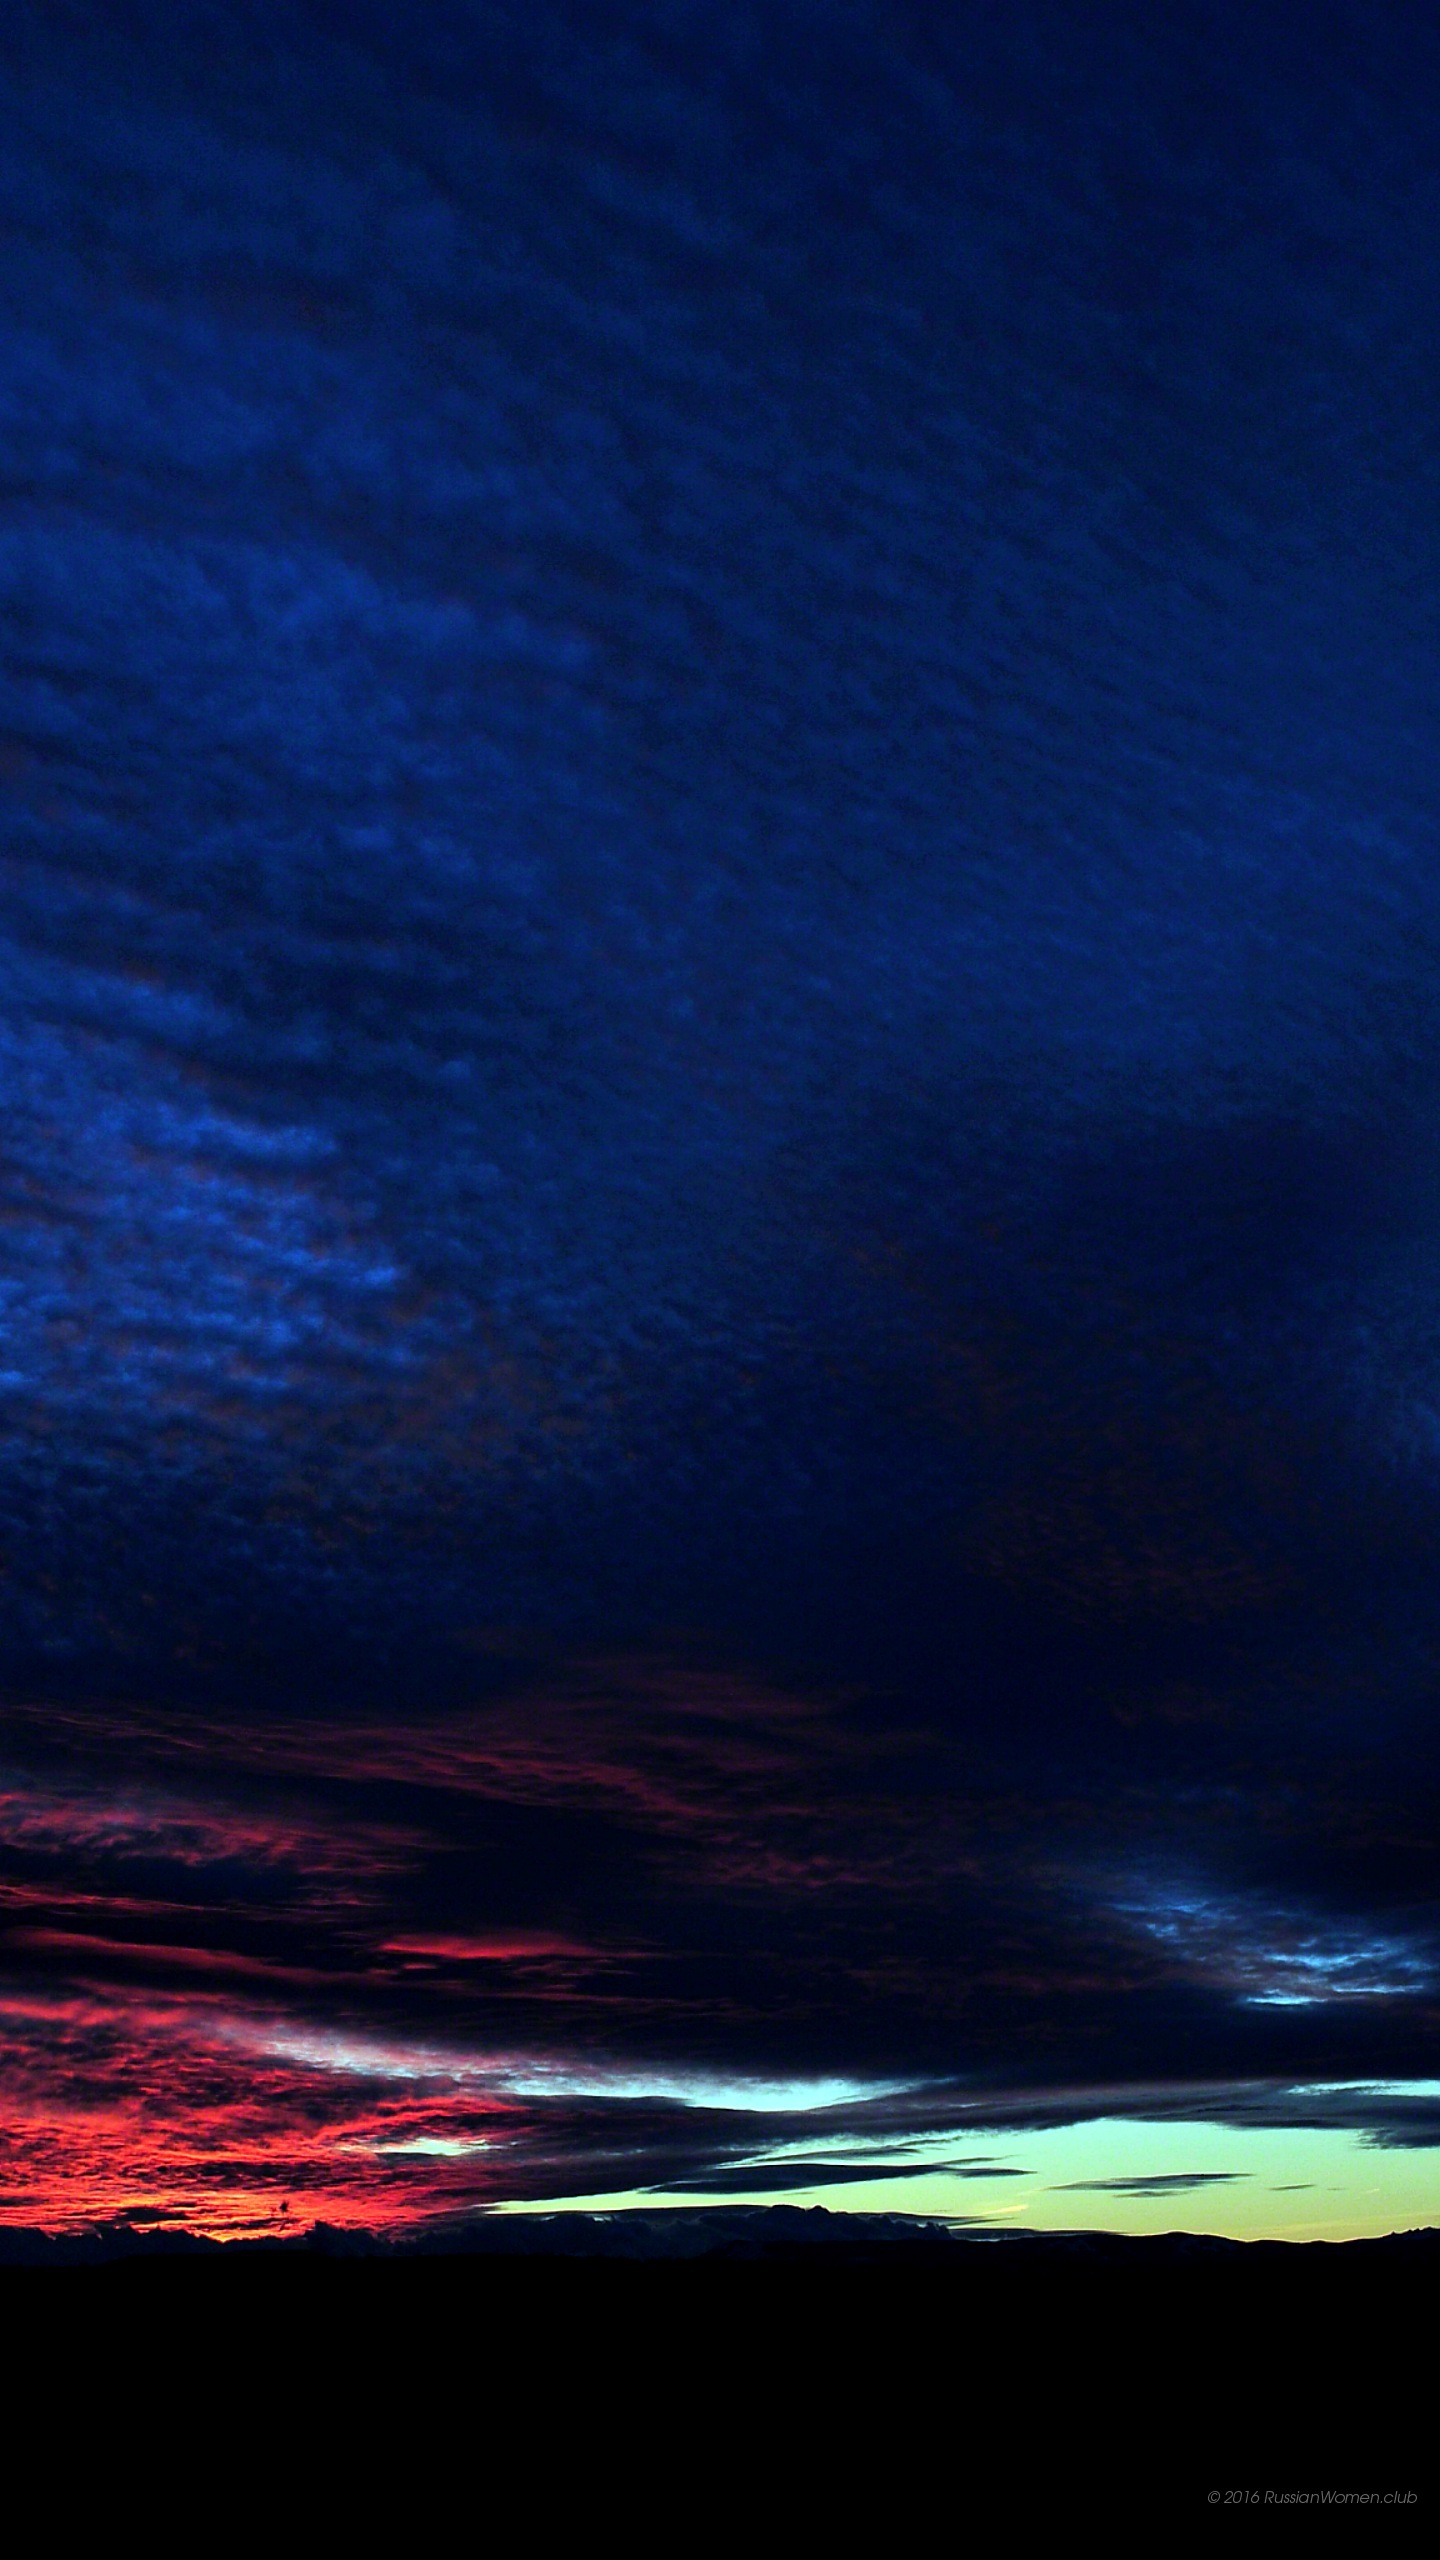 oppo f1 wallpaper hd,himmel,blau,horizont,wolke,atmosphäre